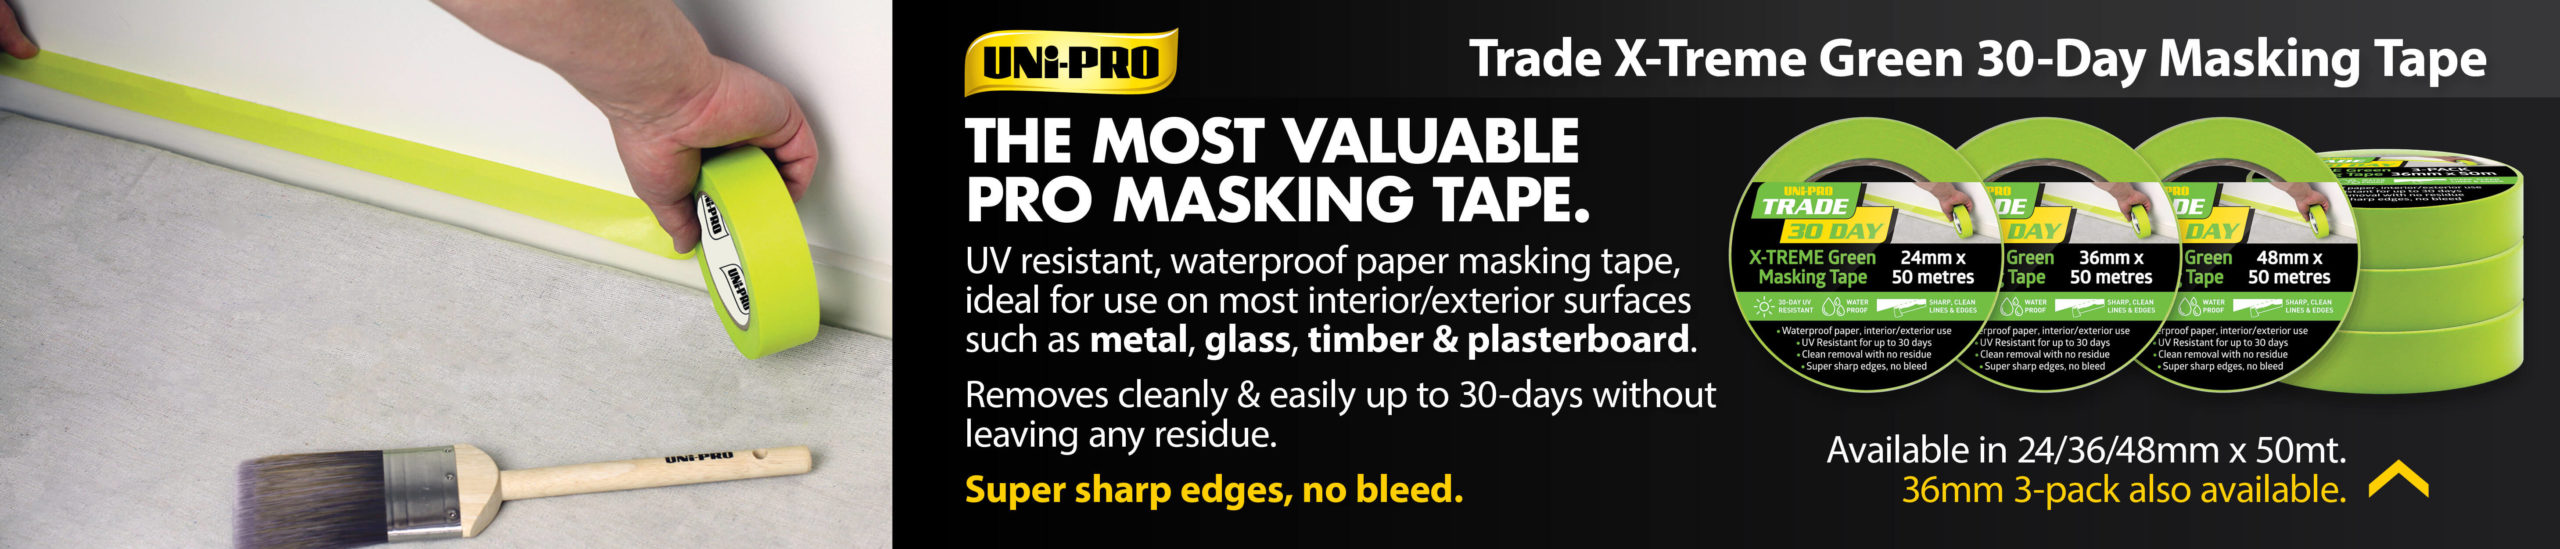 150dpi 2800x600 Slider - X-Treme Masking Tape-compressed